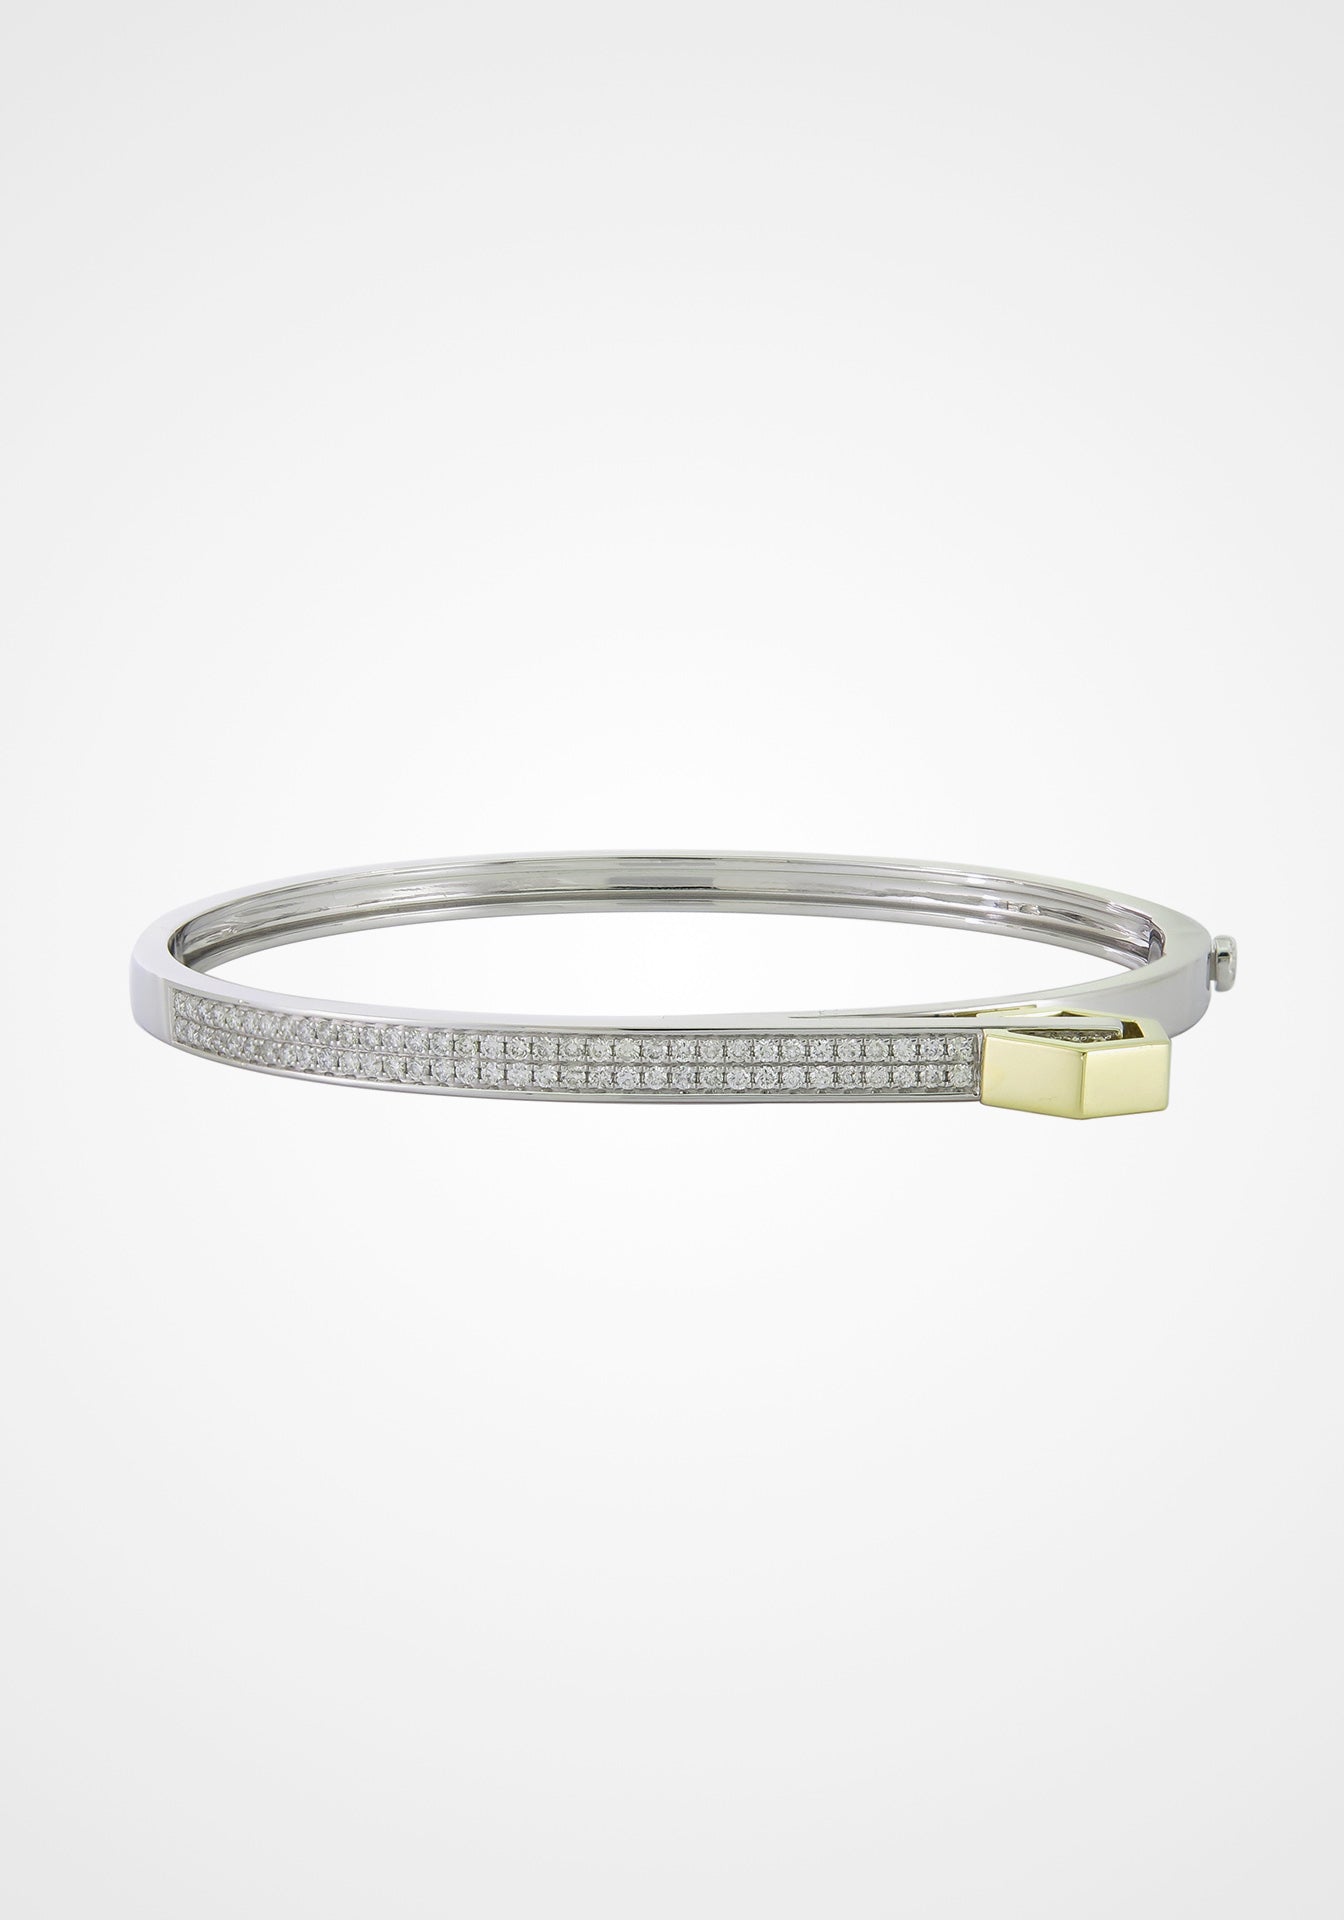 Small, 14K White Gold, Black + White Diamond Bracelet